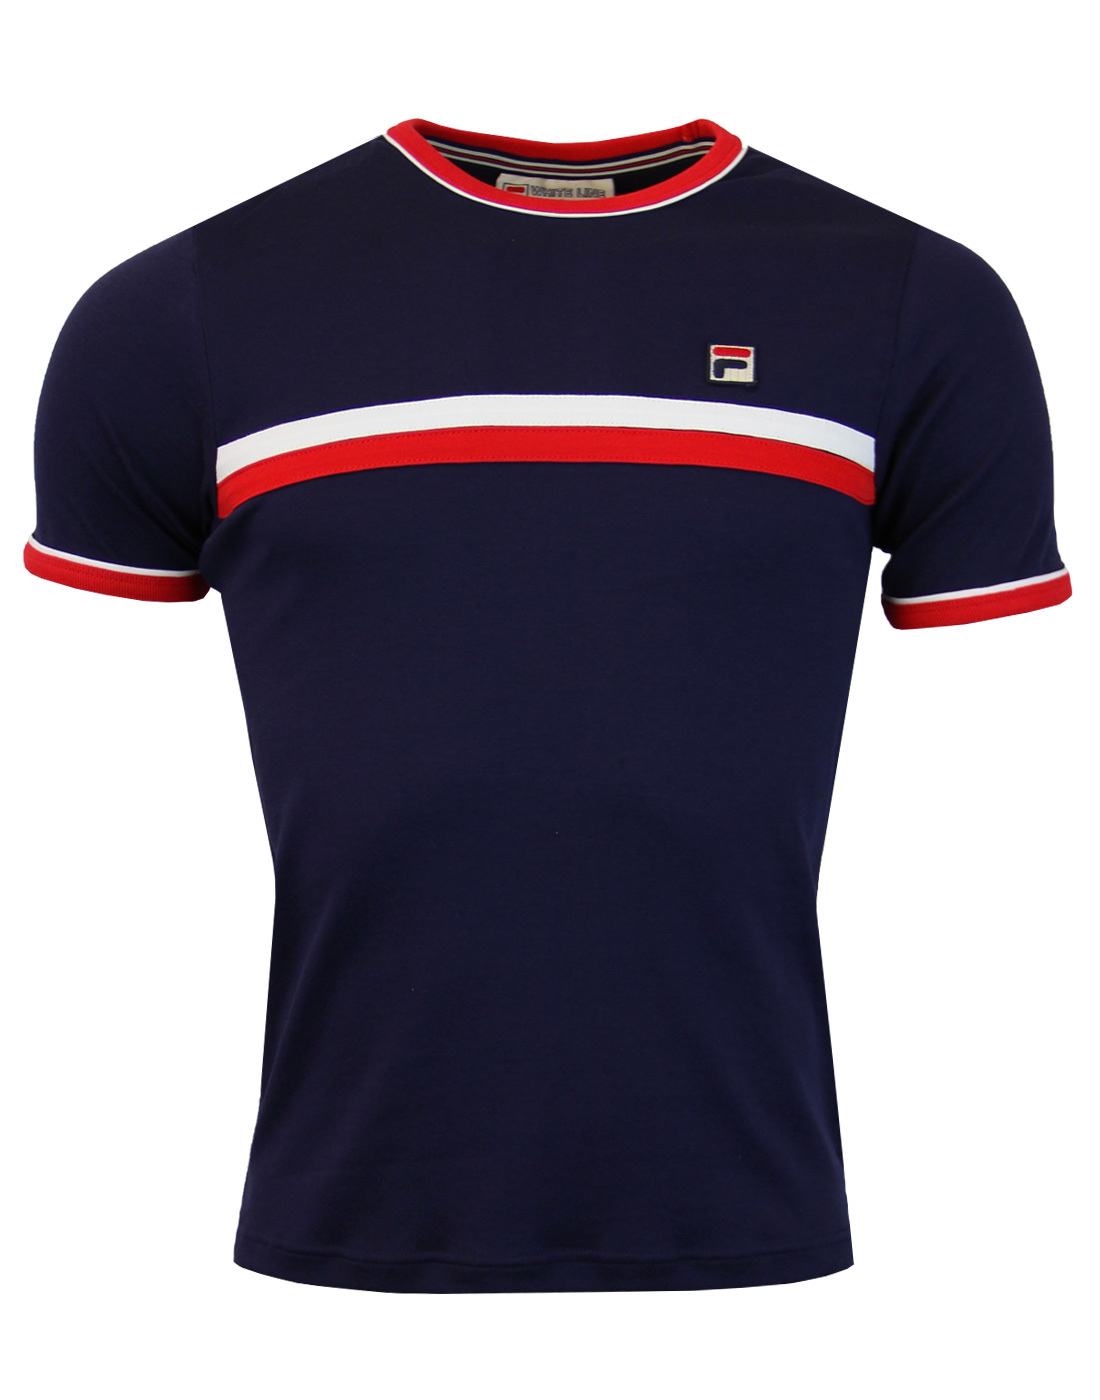 FILA VINTAGE Razee Retro 70s Mod Chest Stripe T-Shirt in Peacoat